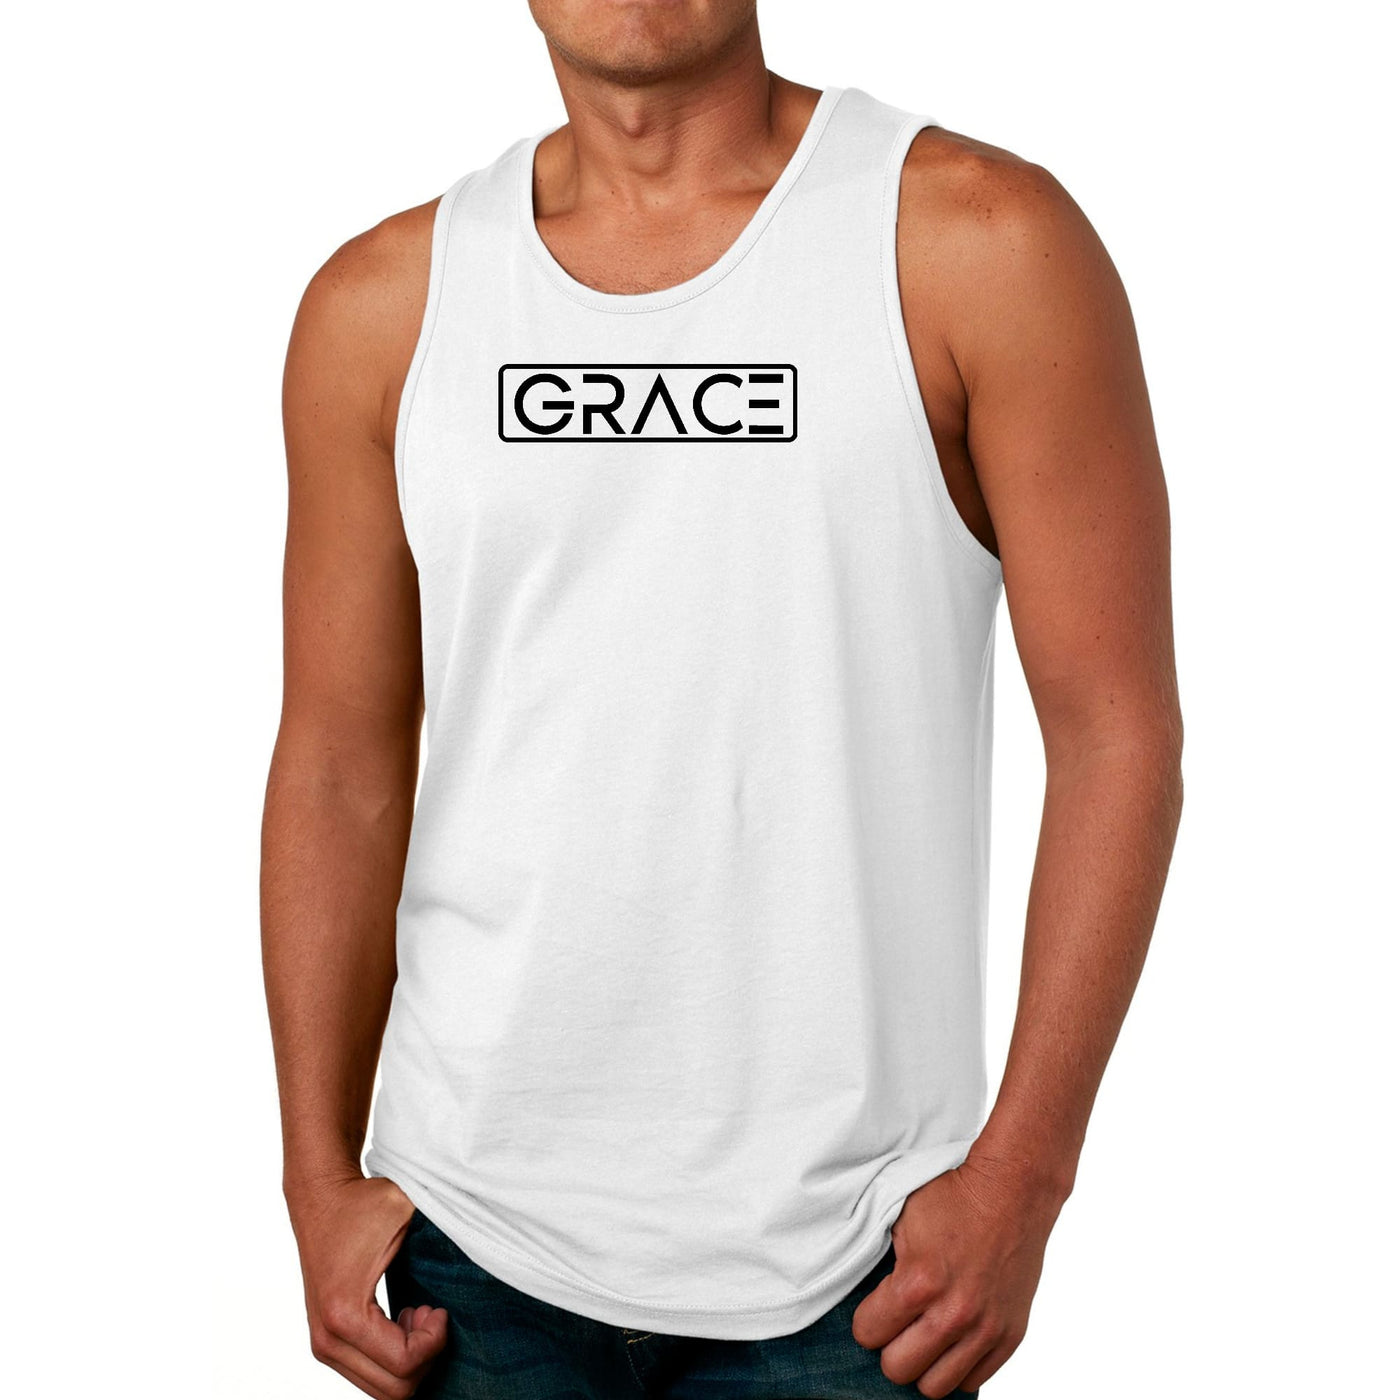 Mens Tank Top Fitness T - shirt Grace Christian Black Illustration - Tops